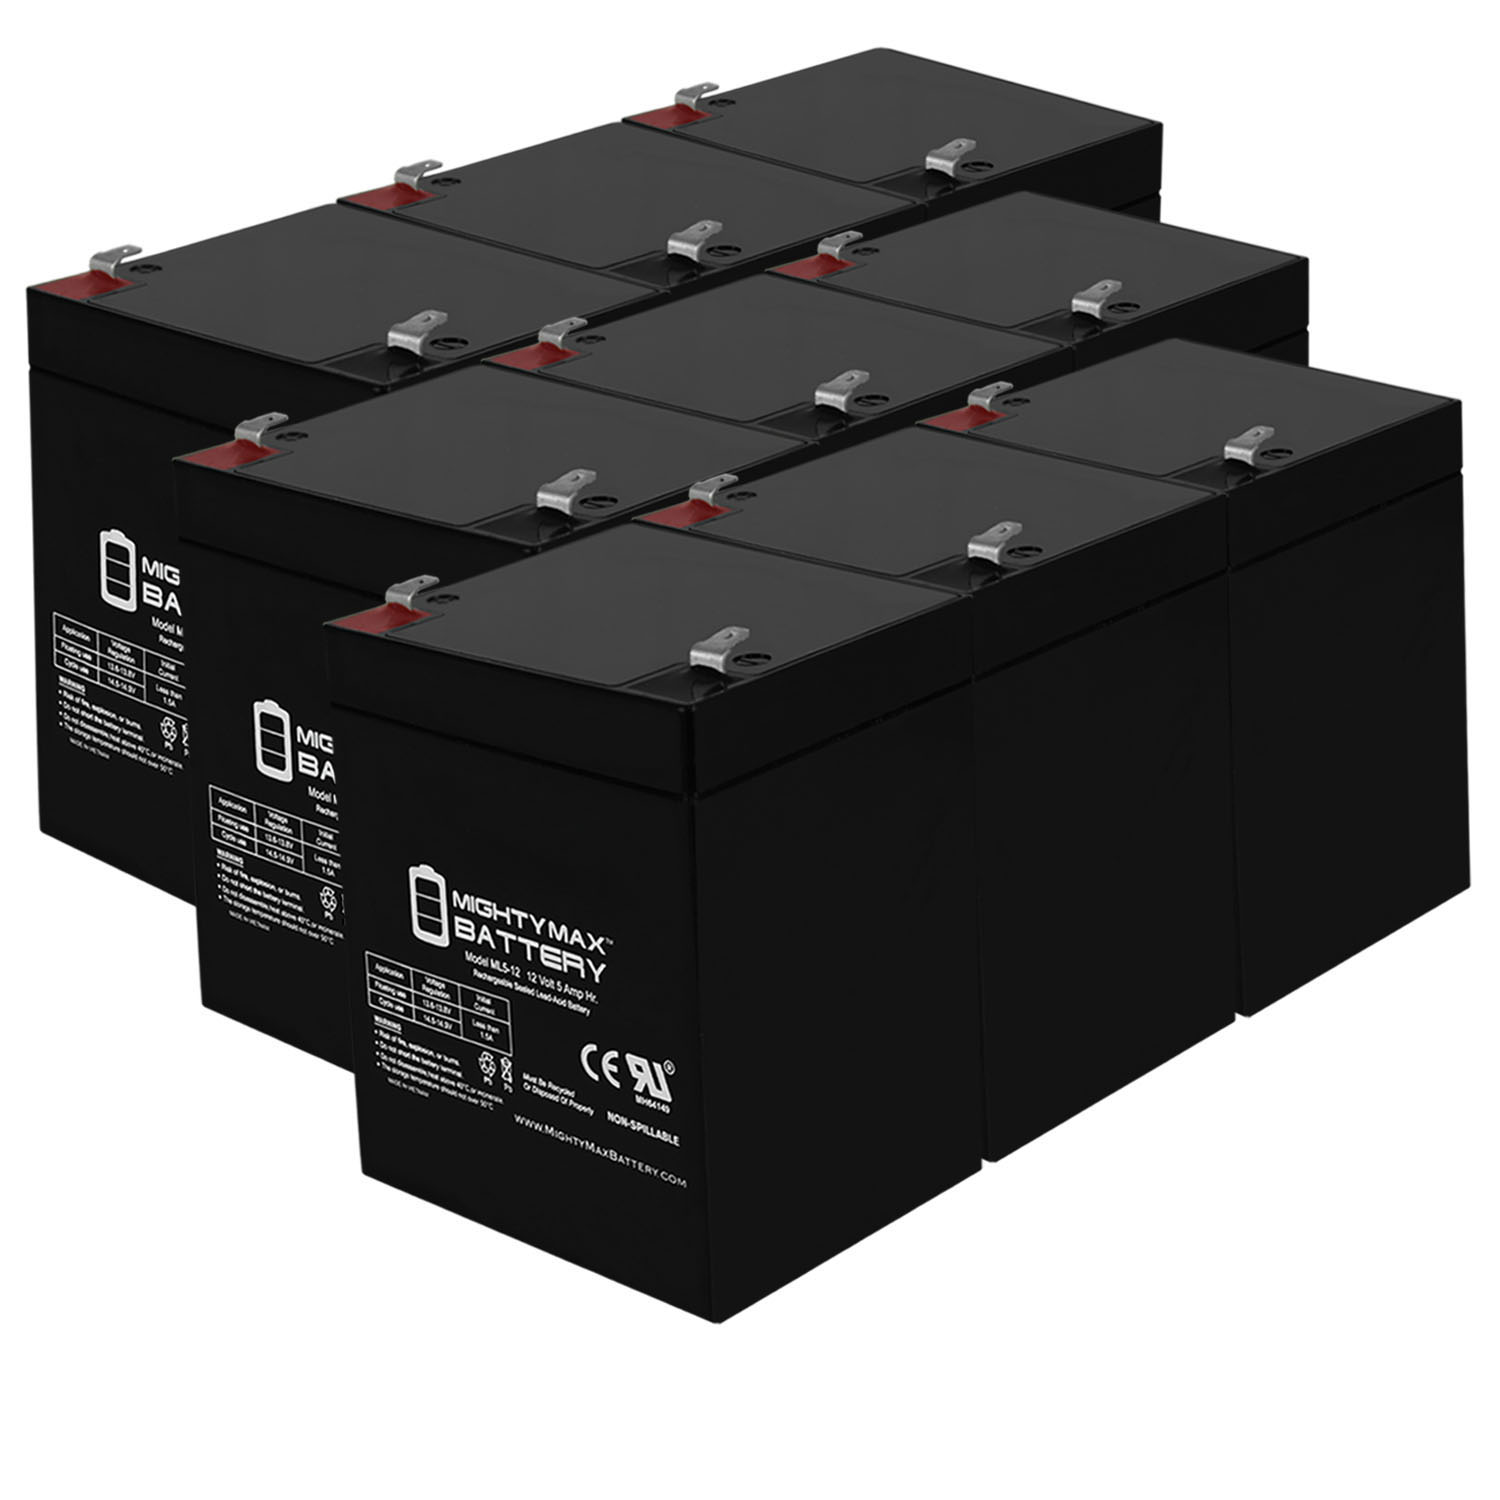 12V 5AH SLA Replacement Battery for Razor E100 Red 13111260 - 9 Pack